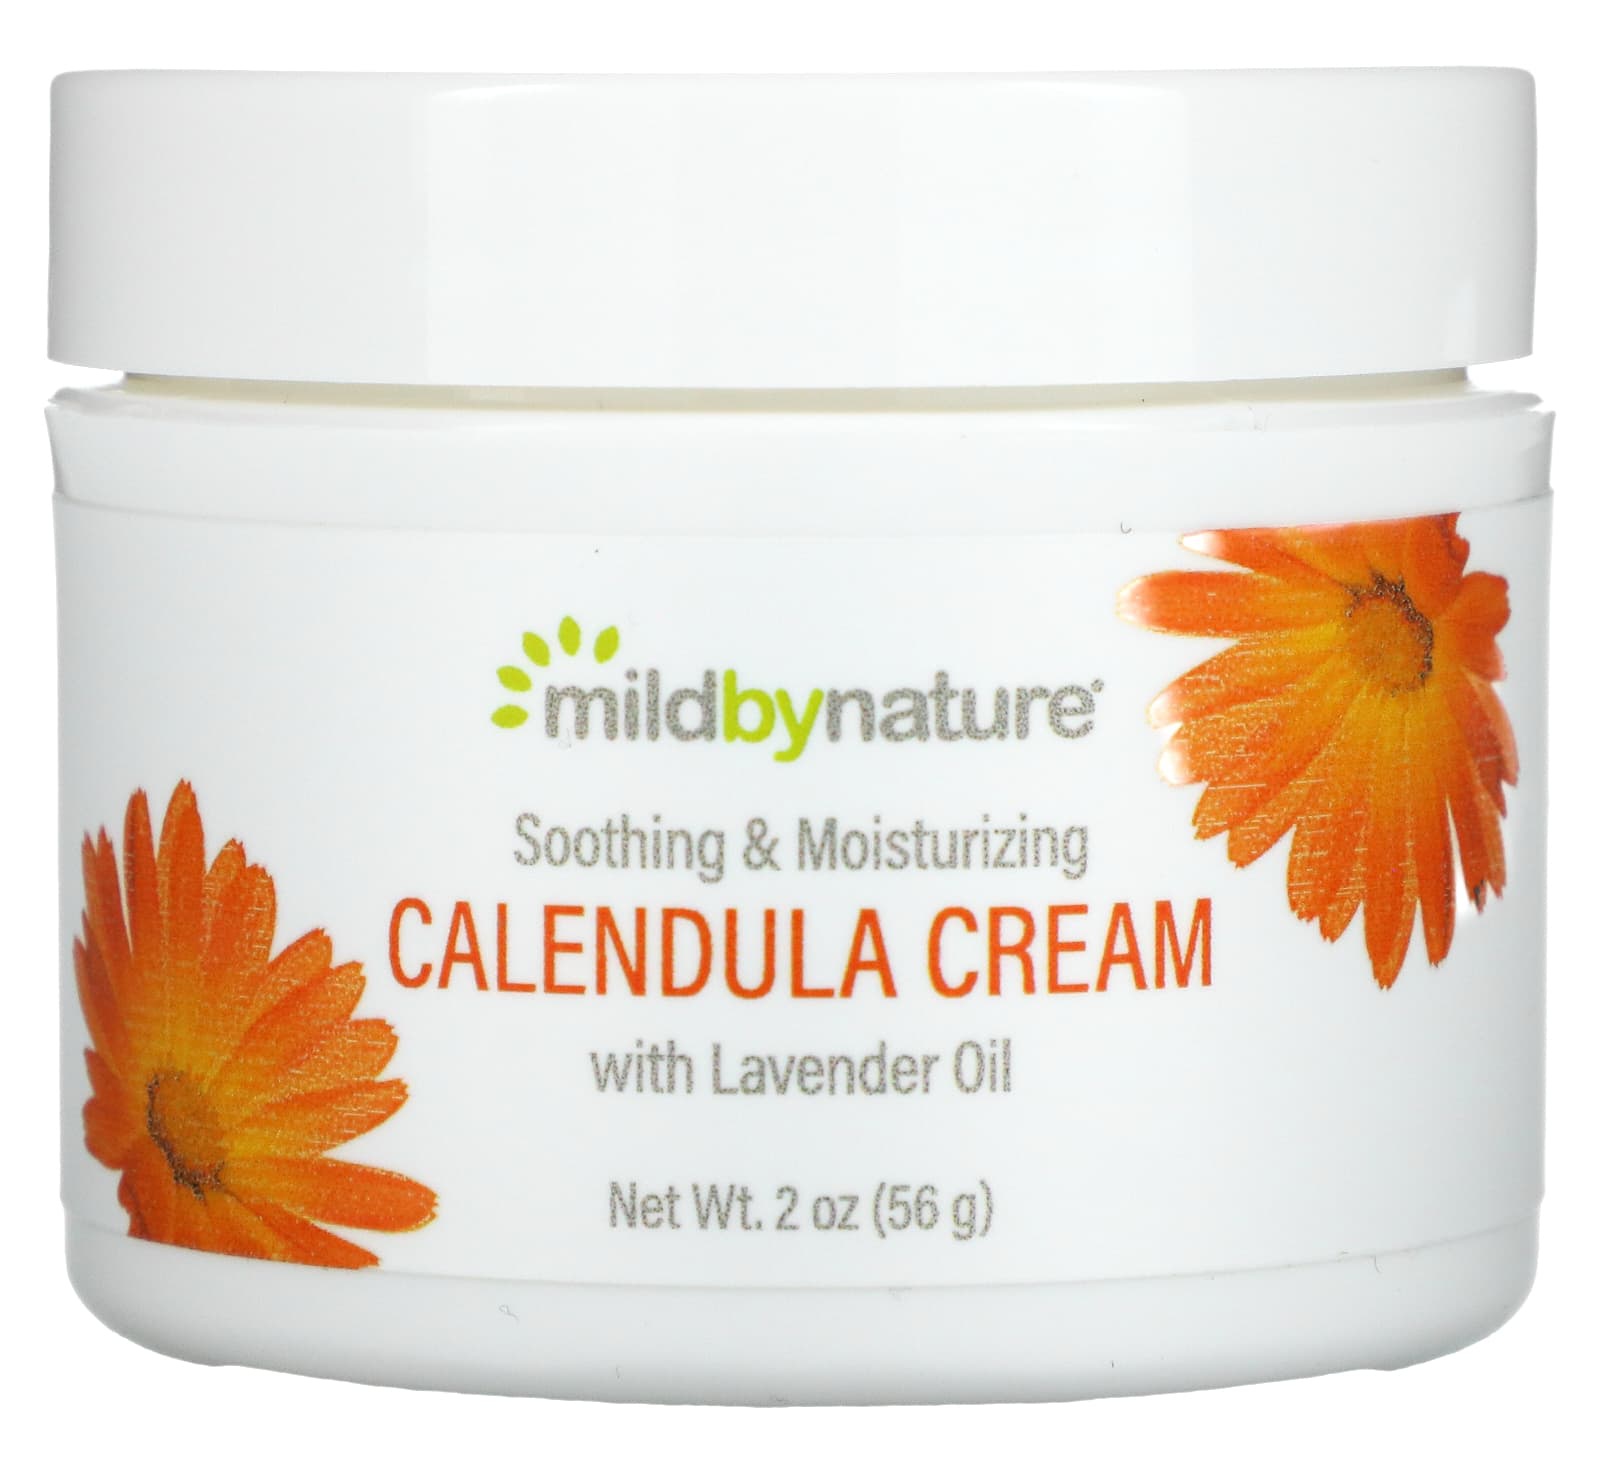 Mild By Nature Calendula Cream